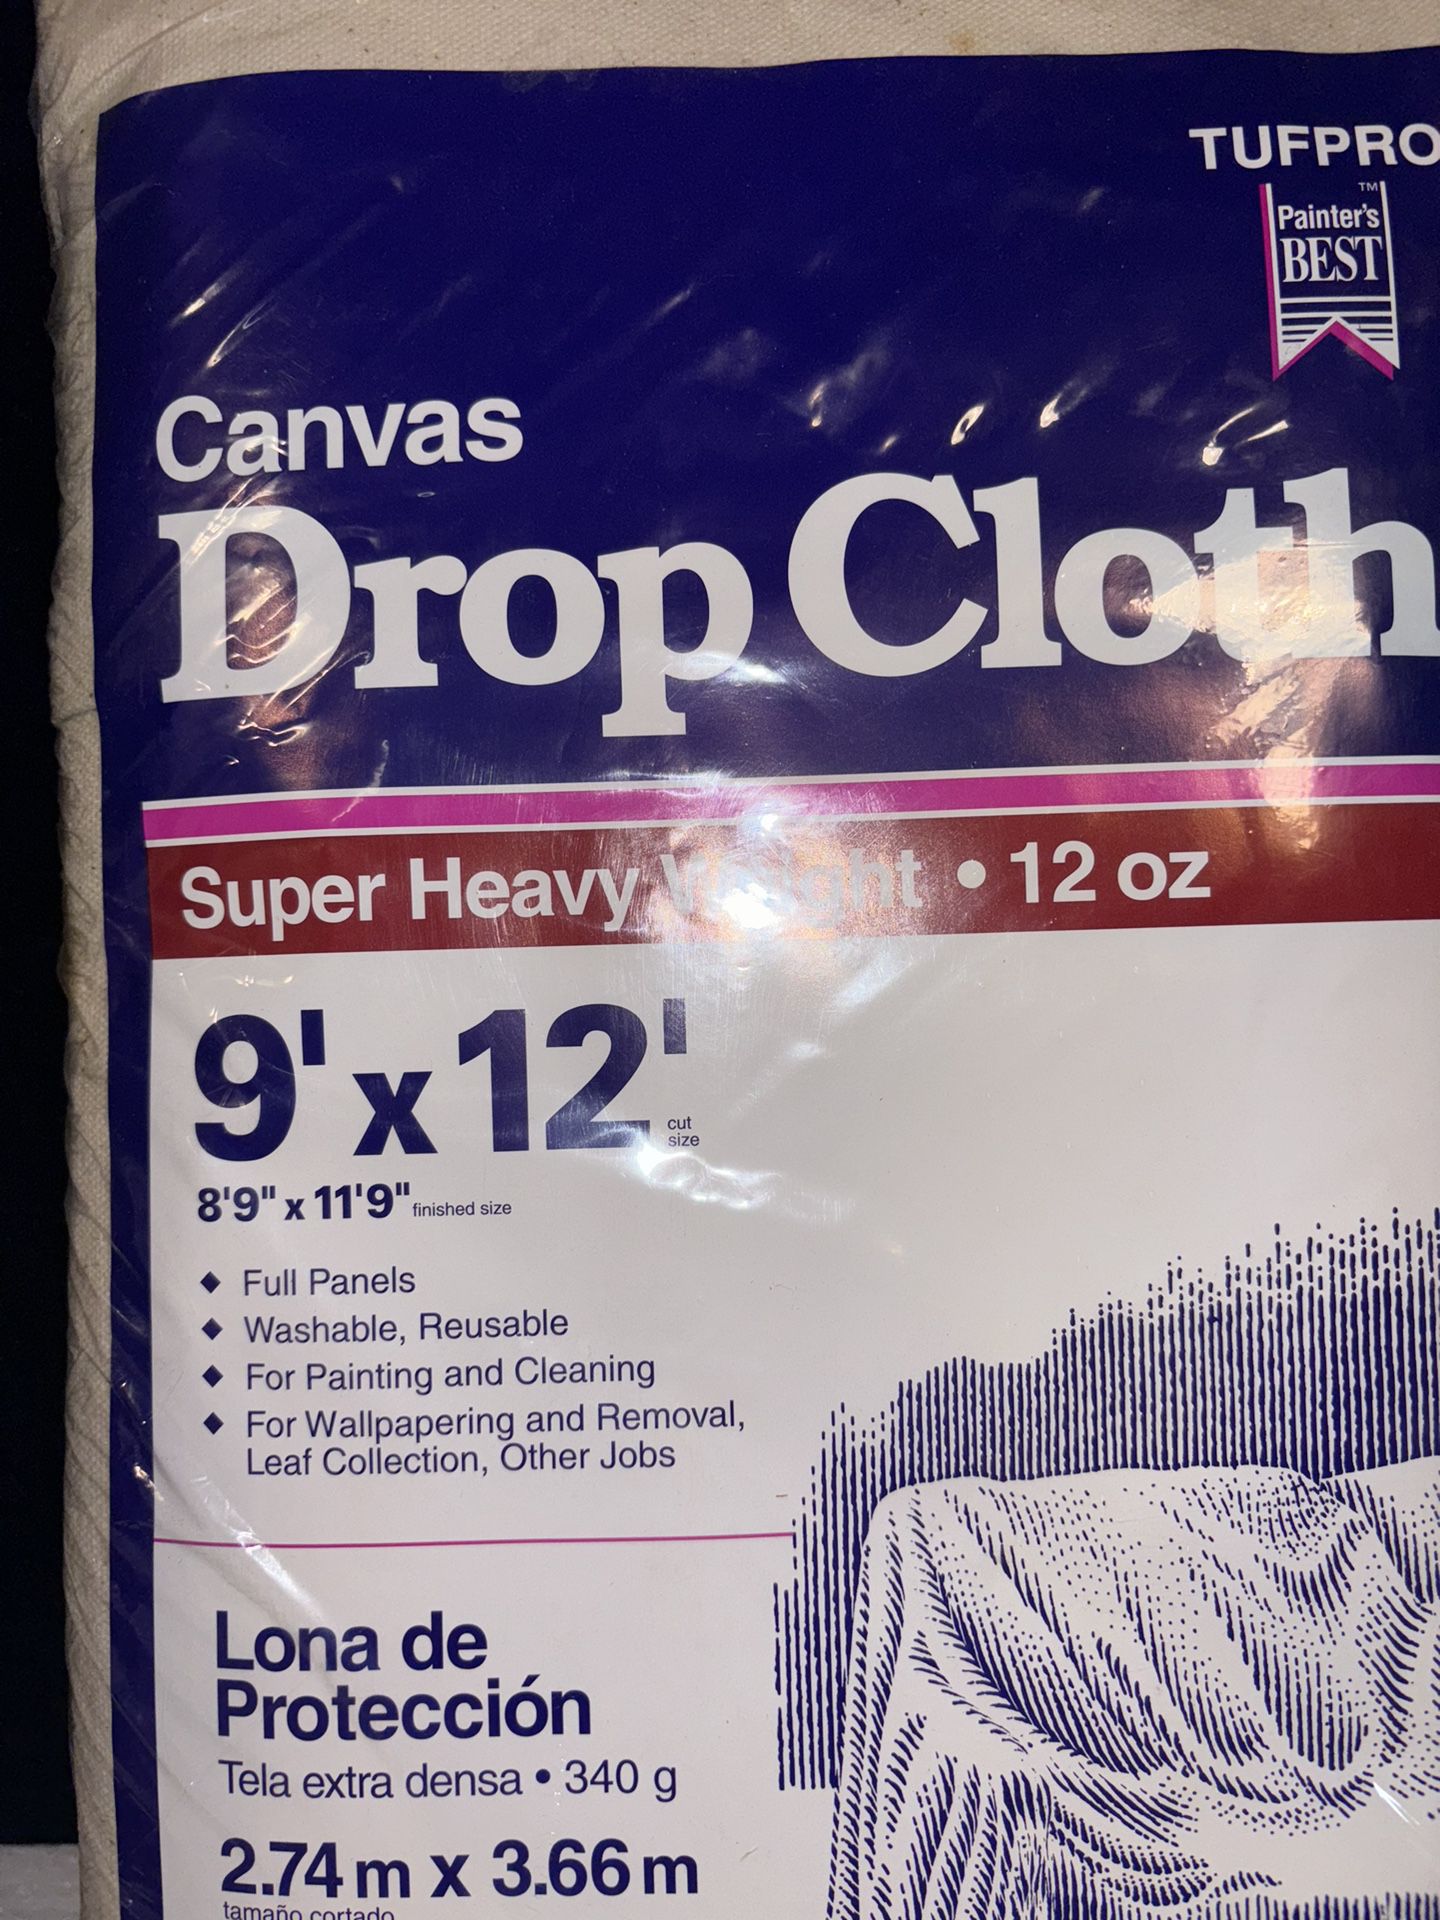 New Canvas Dropcloth 9’ x 12’